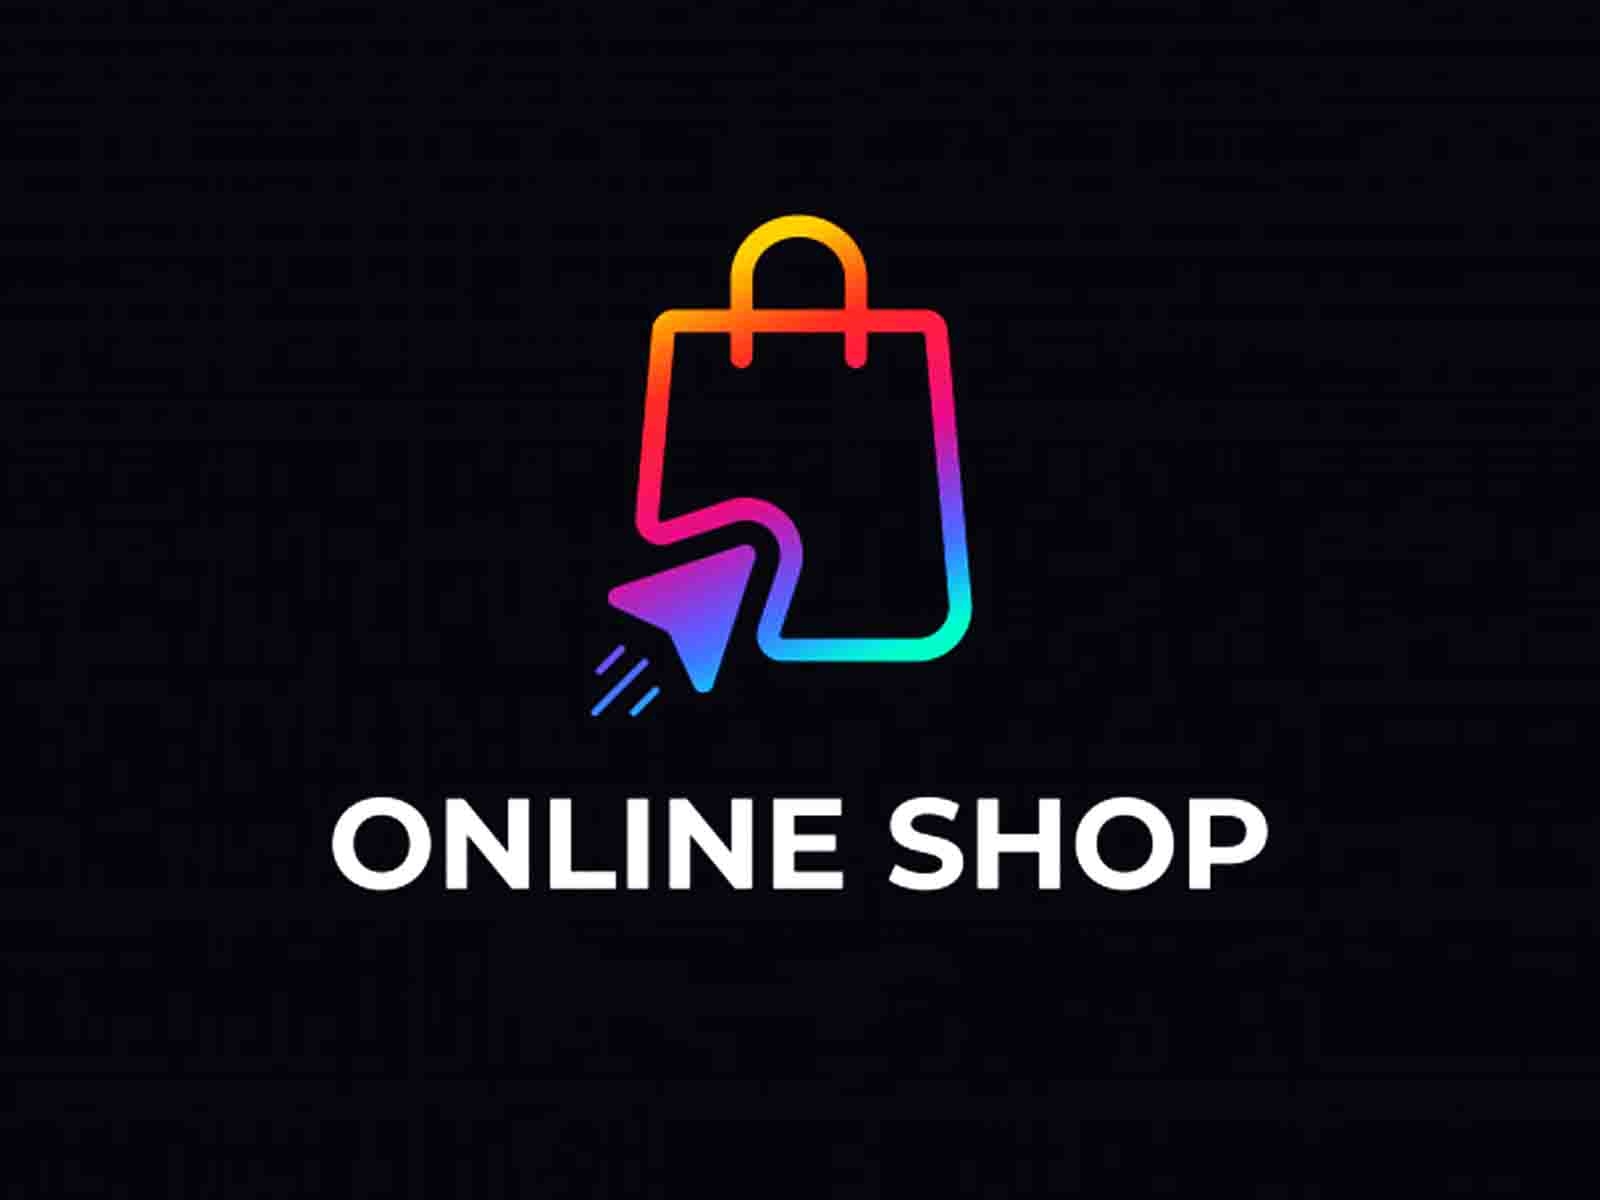 Online shopping logo design by Ahmad Abbas on Dribbble